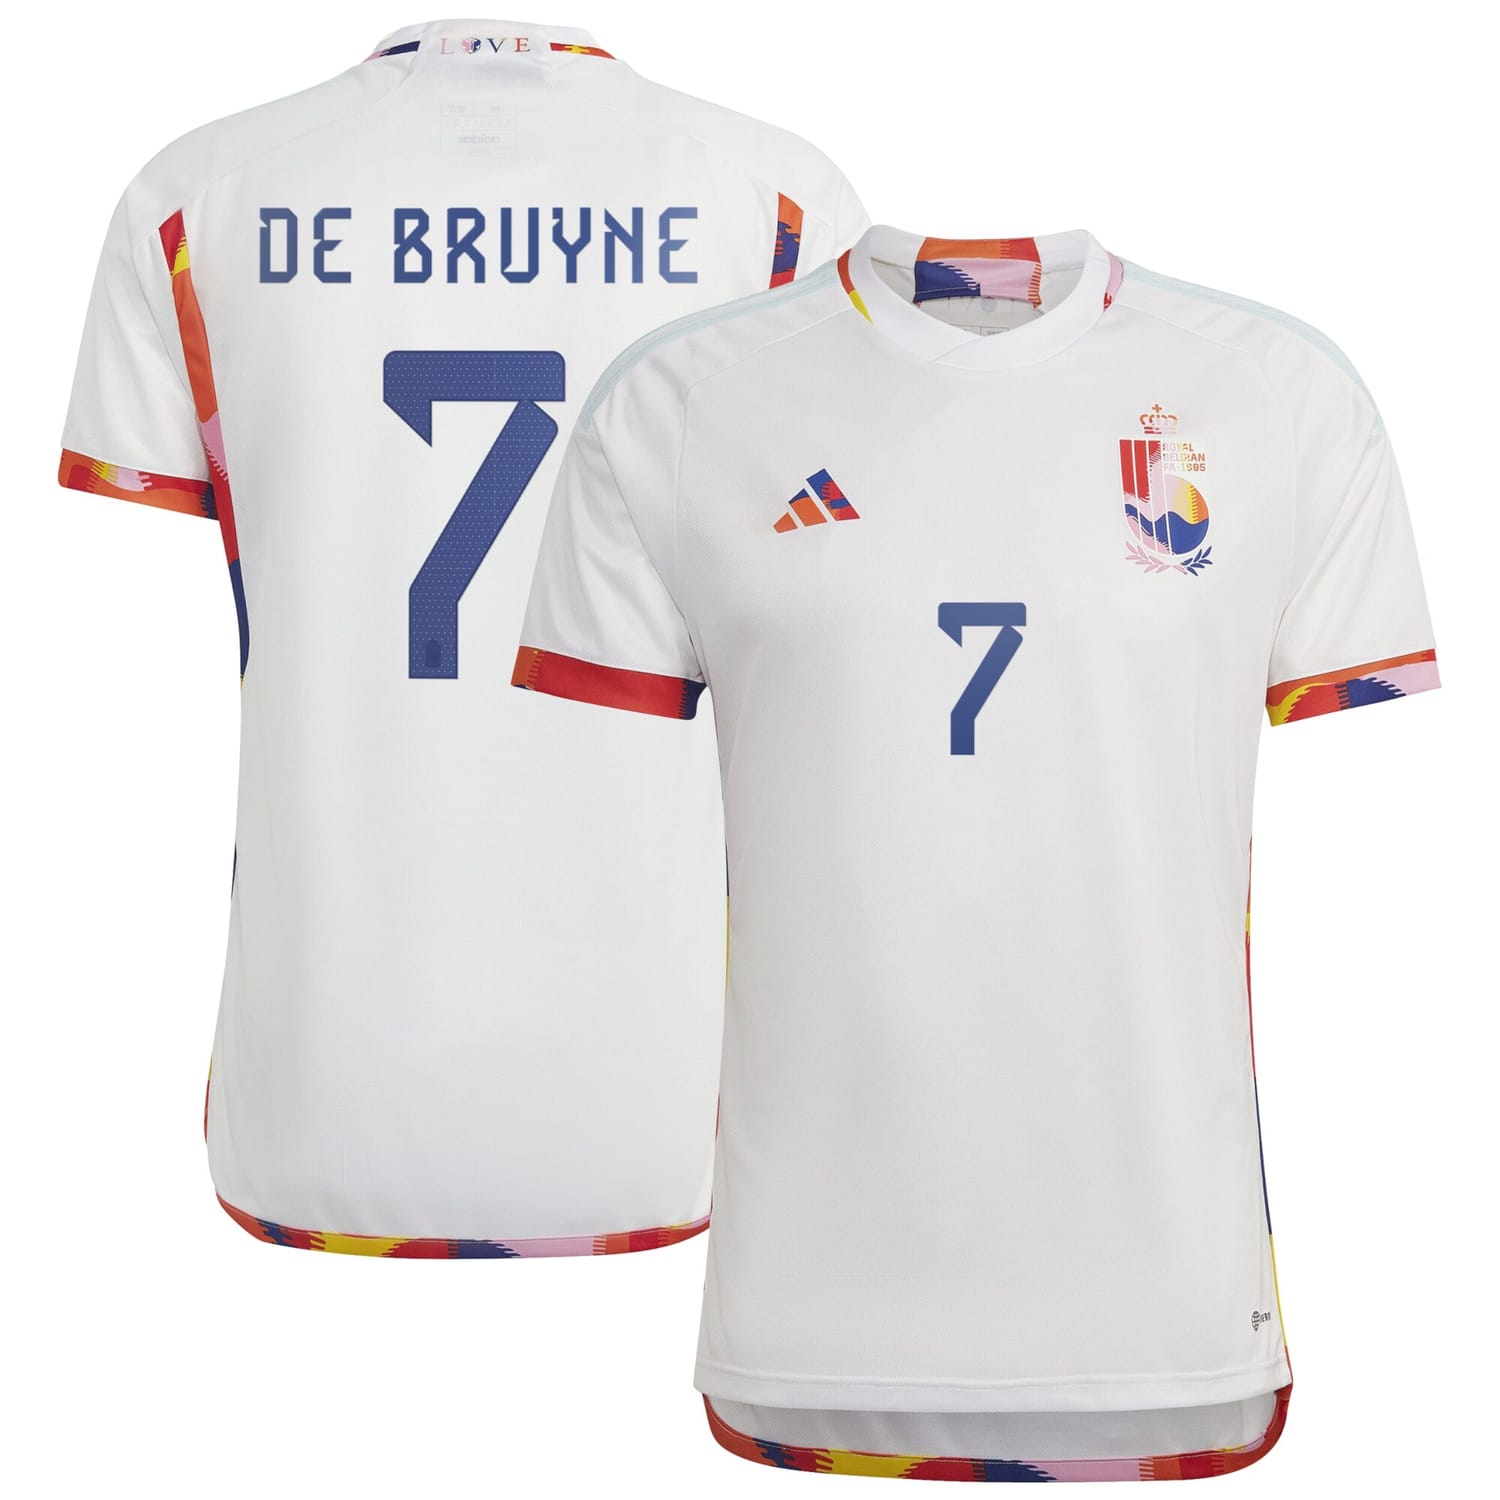 Belgium National Team Away Jersey Shirt player Kevin De Bruyne 7 printing for Men